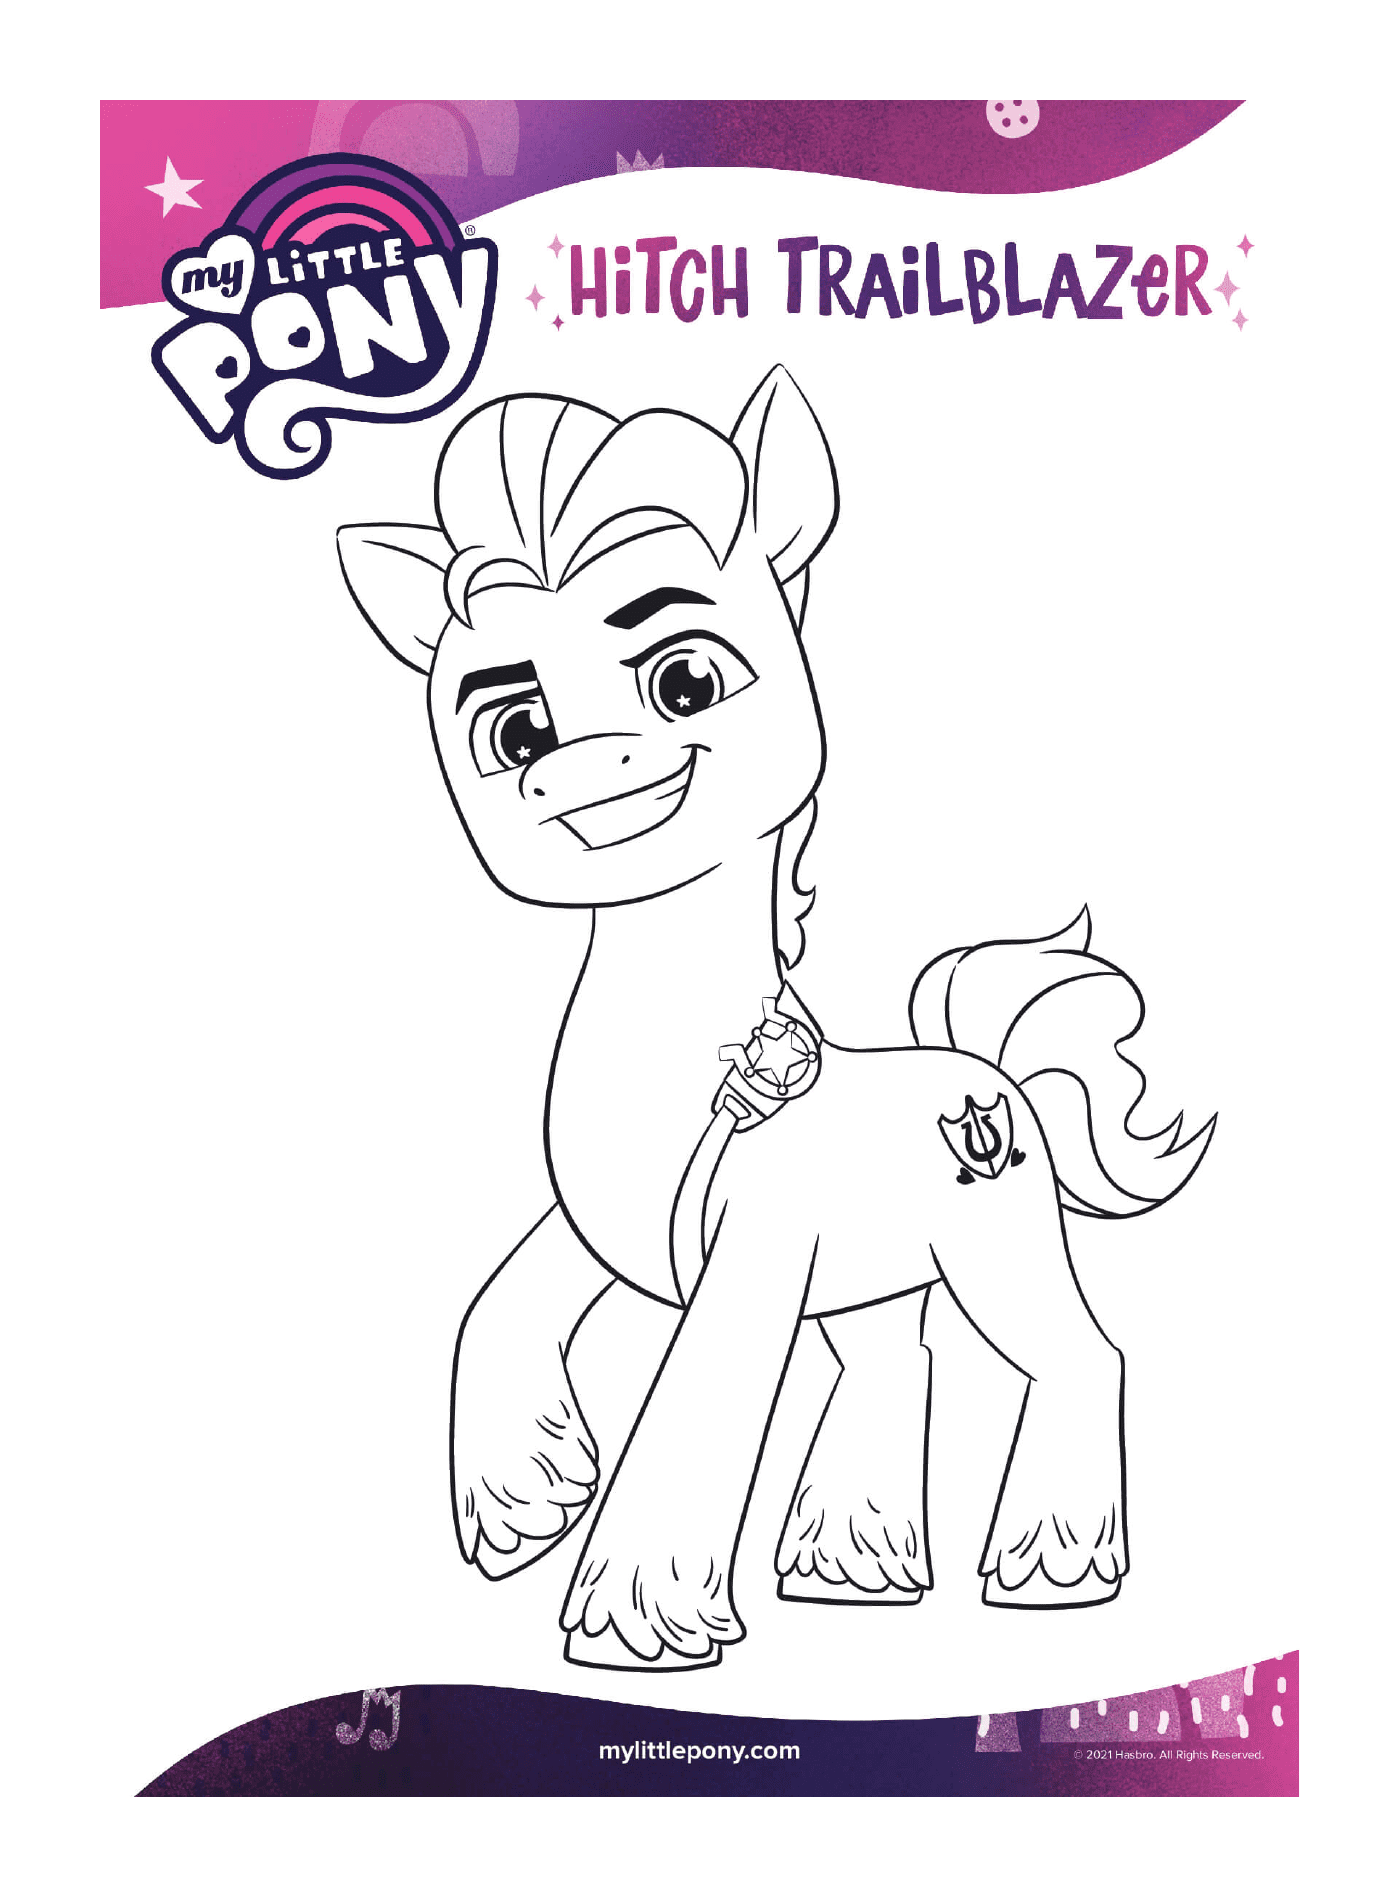  Hitch Trailblazer, neue Generation des Ponys 